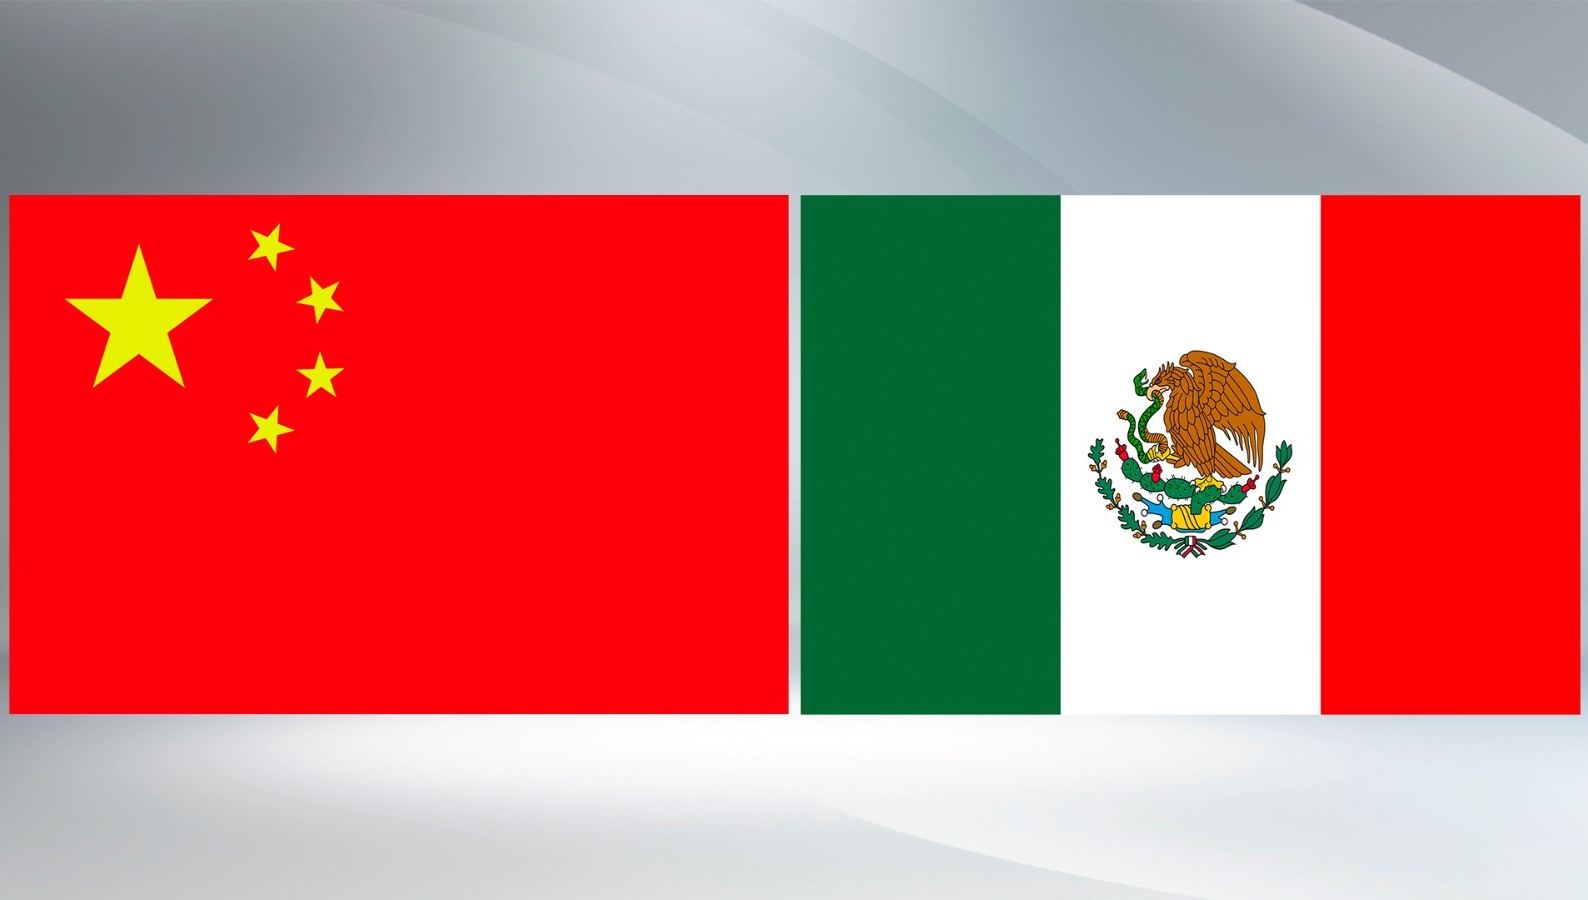 Xi congratulates Sheinbaum on election as president of Mexico